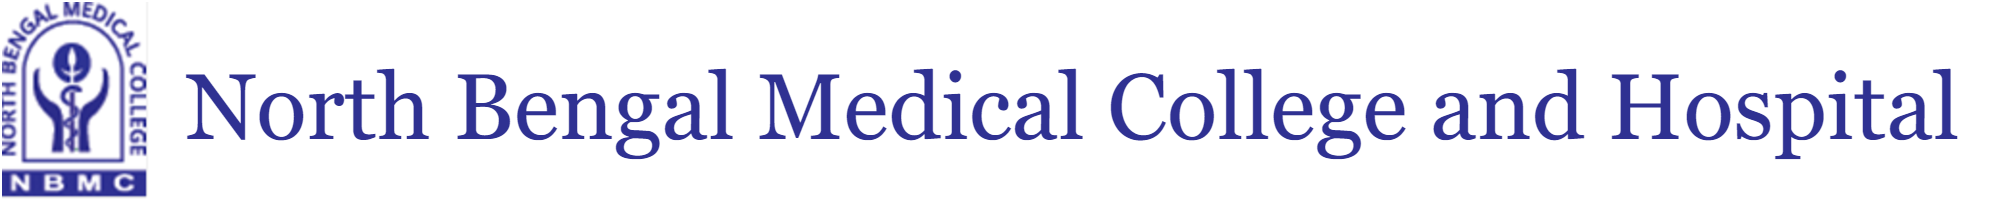 North Bengal Medical College-logo